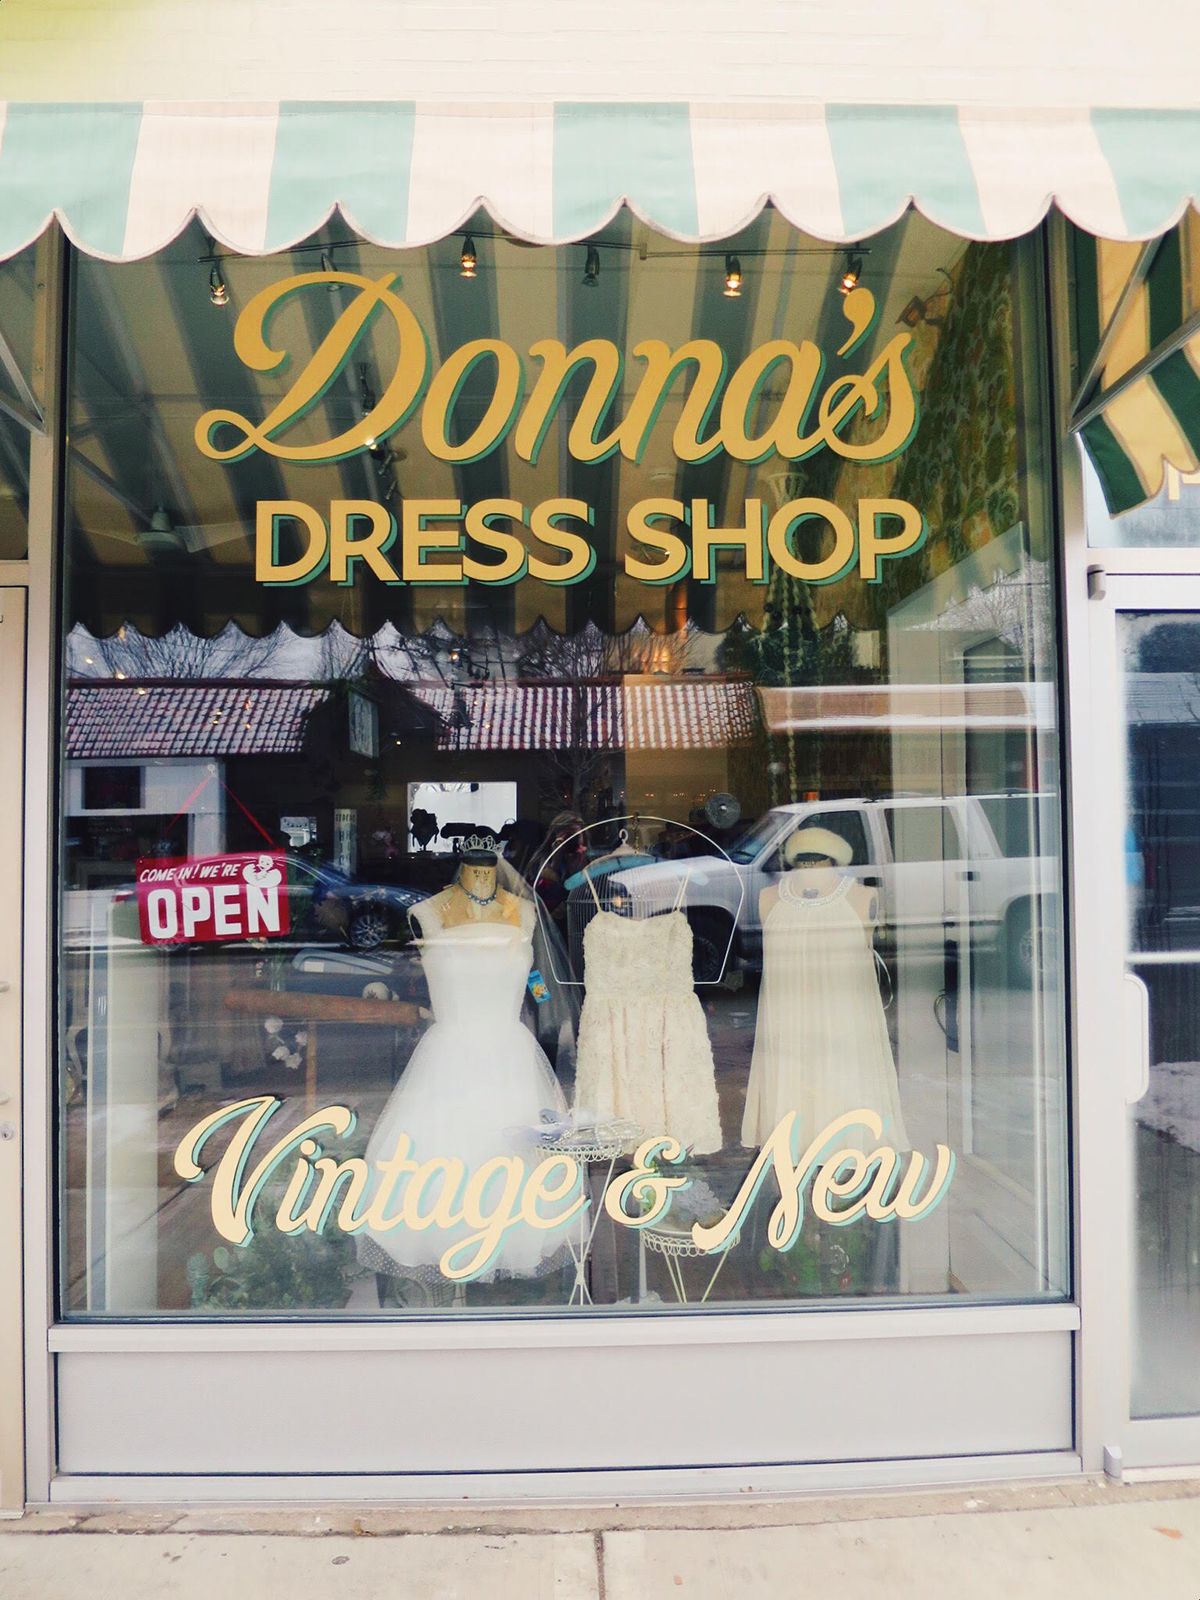 Donna's Dress Shop